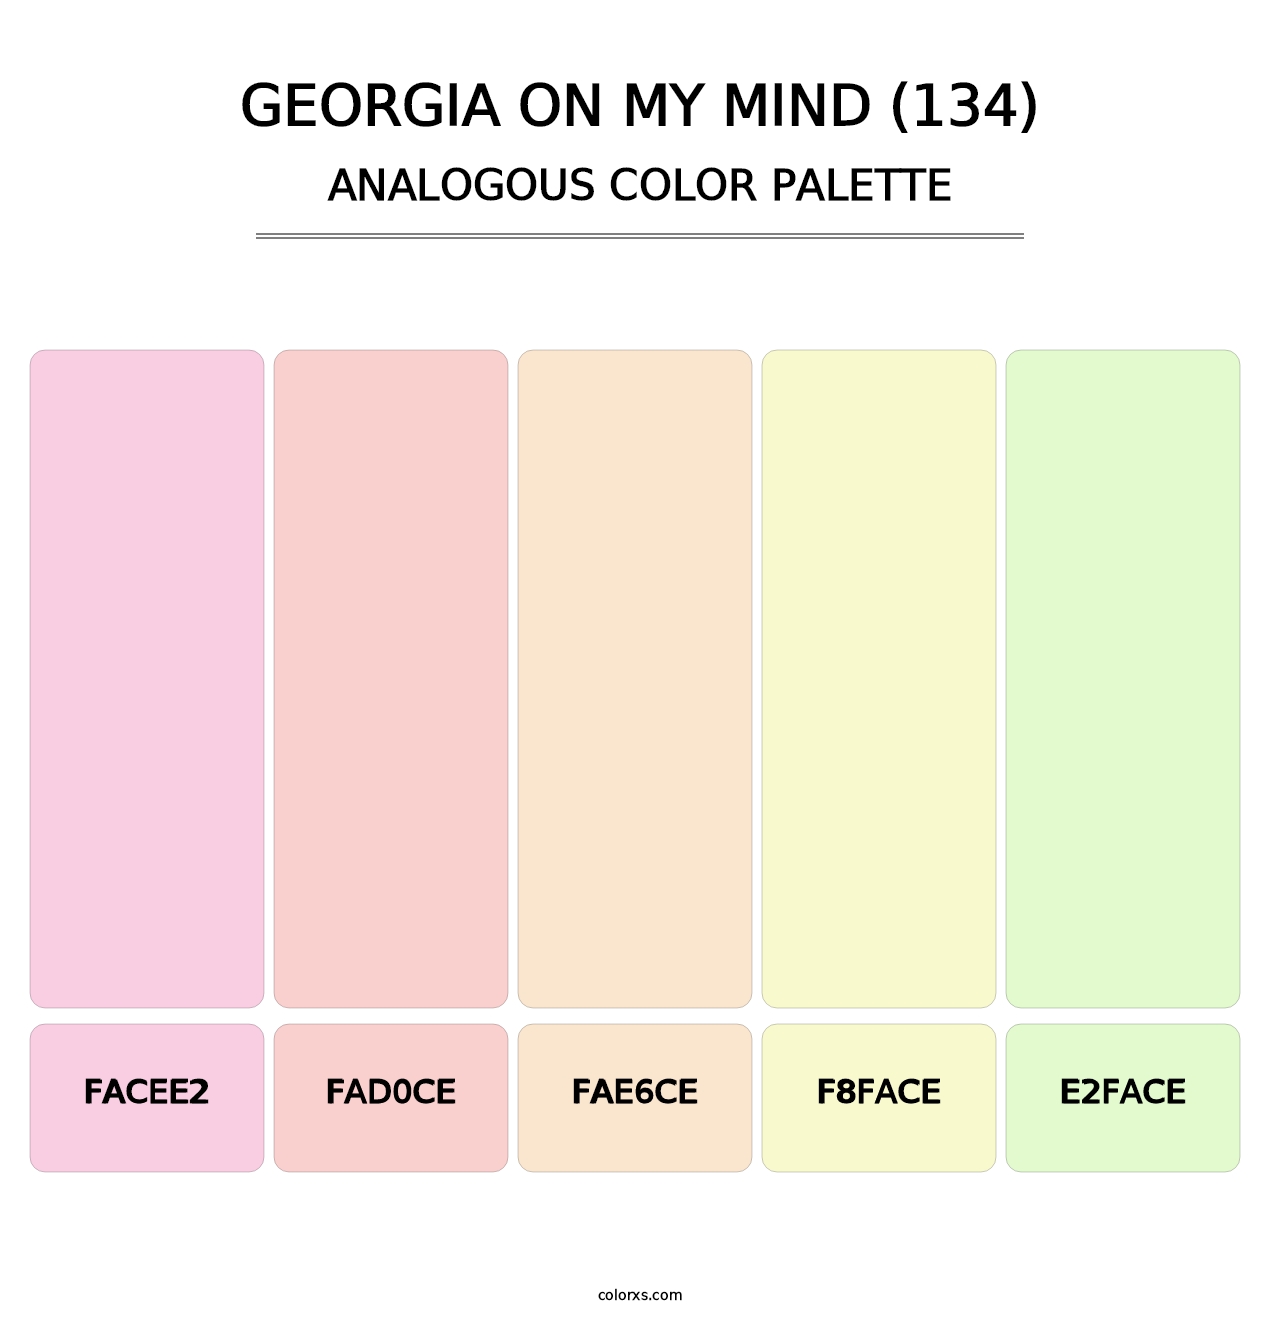 Georgia On My Mind (134) - Analogous Color Palette